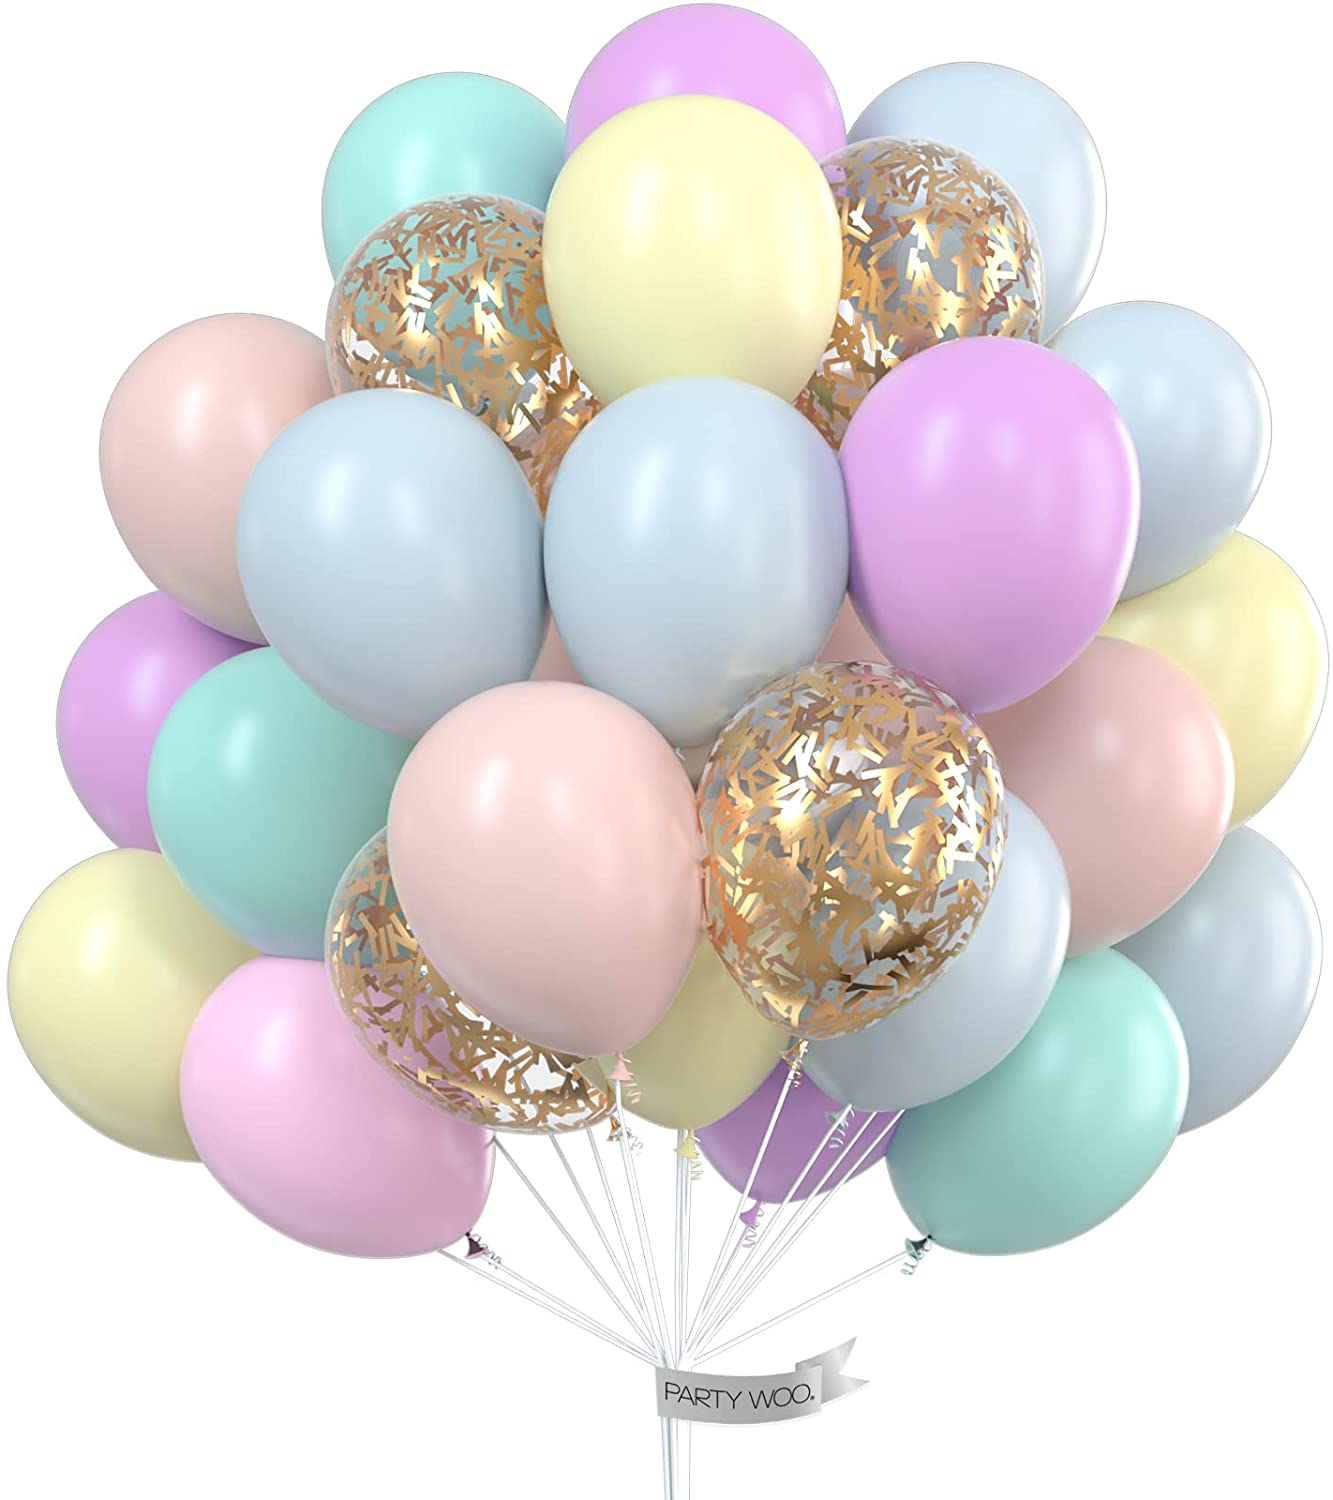 PartyWoo Pastel Balloons, 60 pcs 12 Inch Pastel Latex Balloons